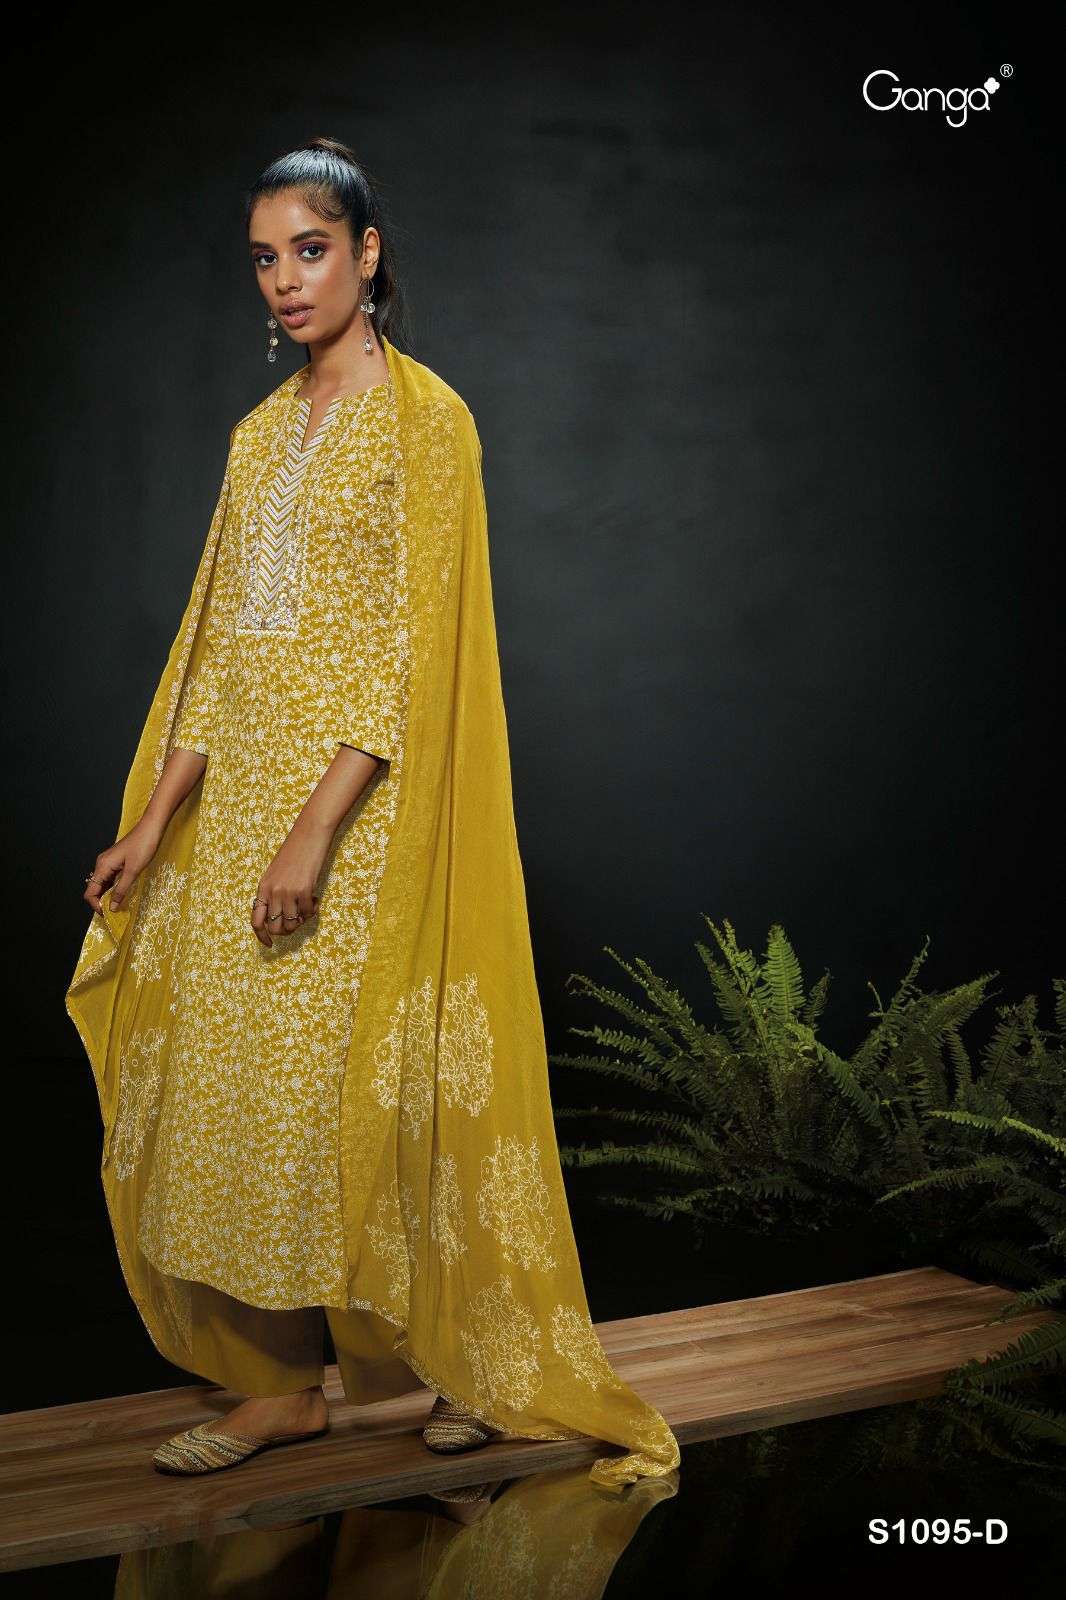 ganga rabta 1095 series indian designer salwar kameez catalogue wholesale price surat